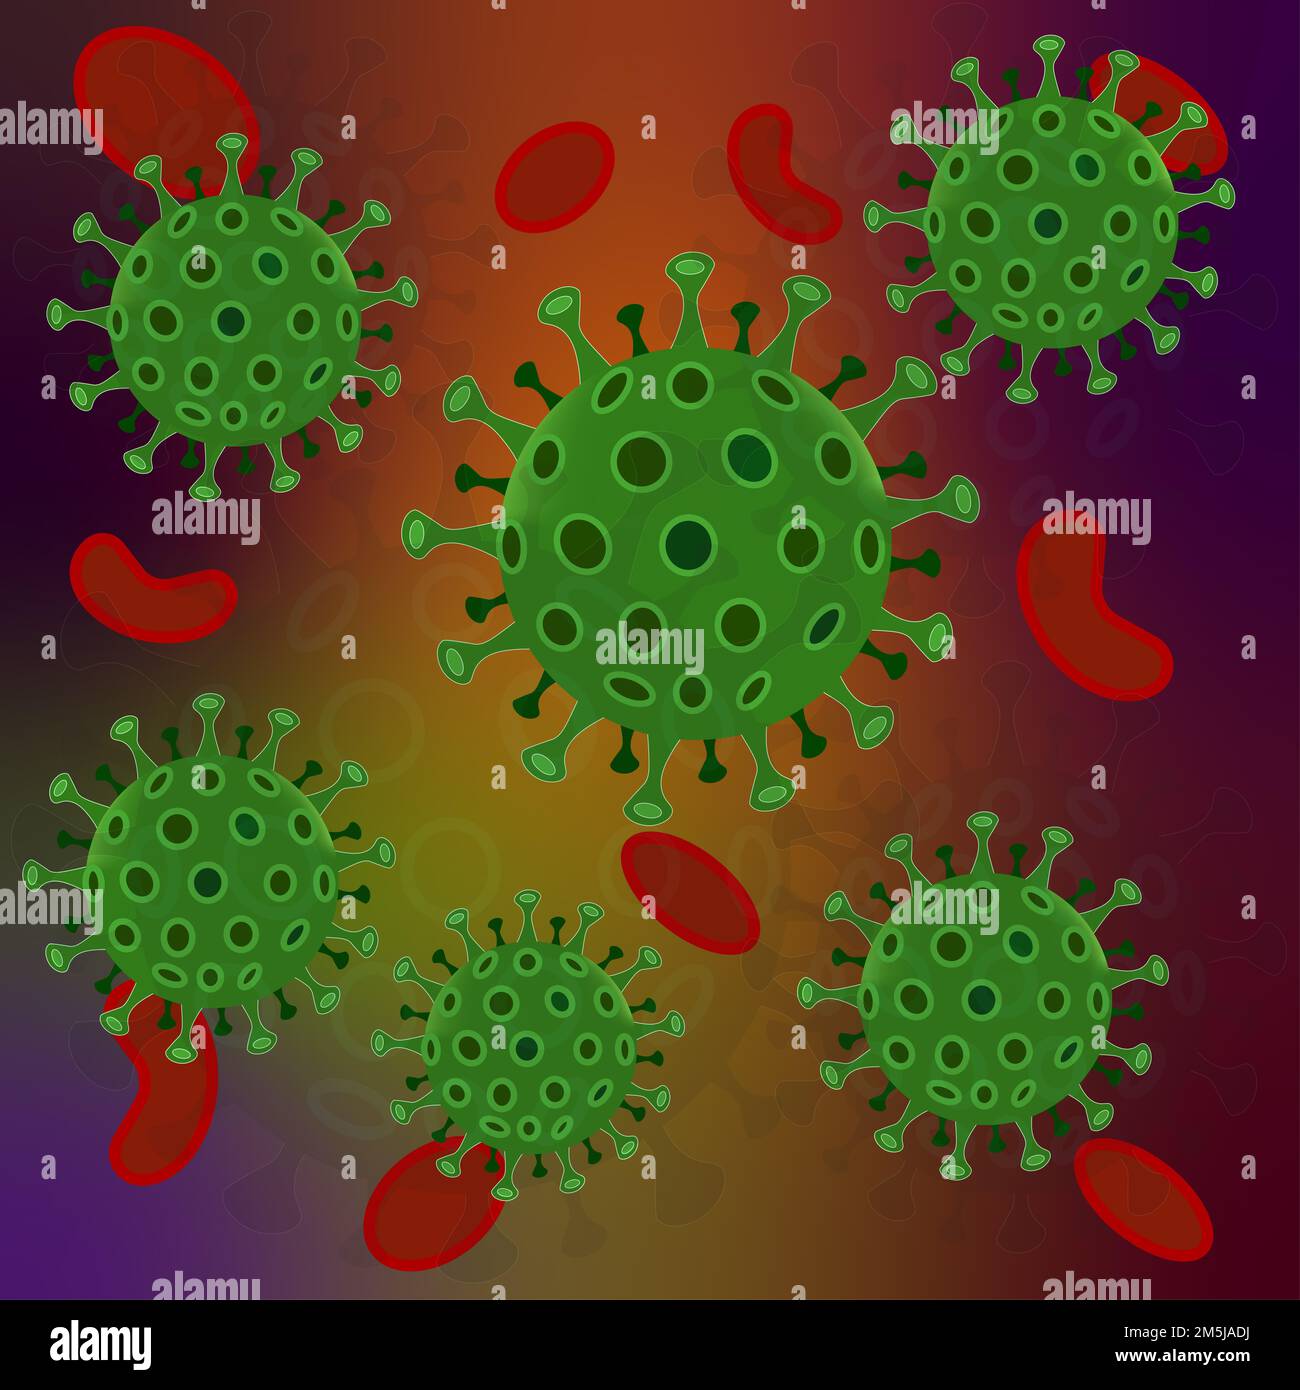 a corona virus background Stock Photo